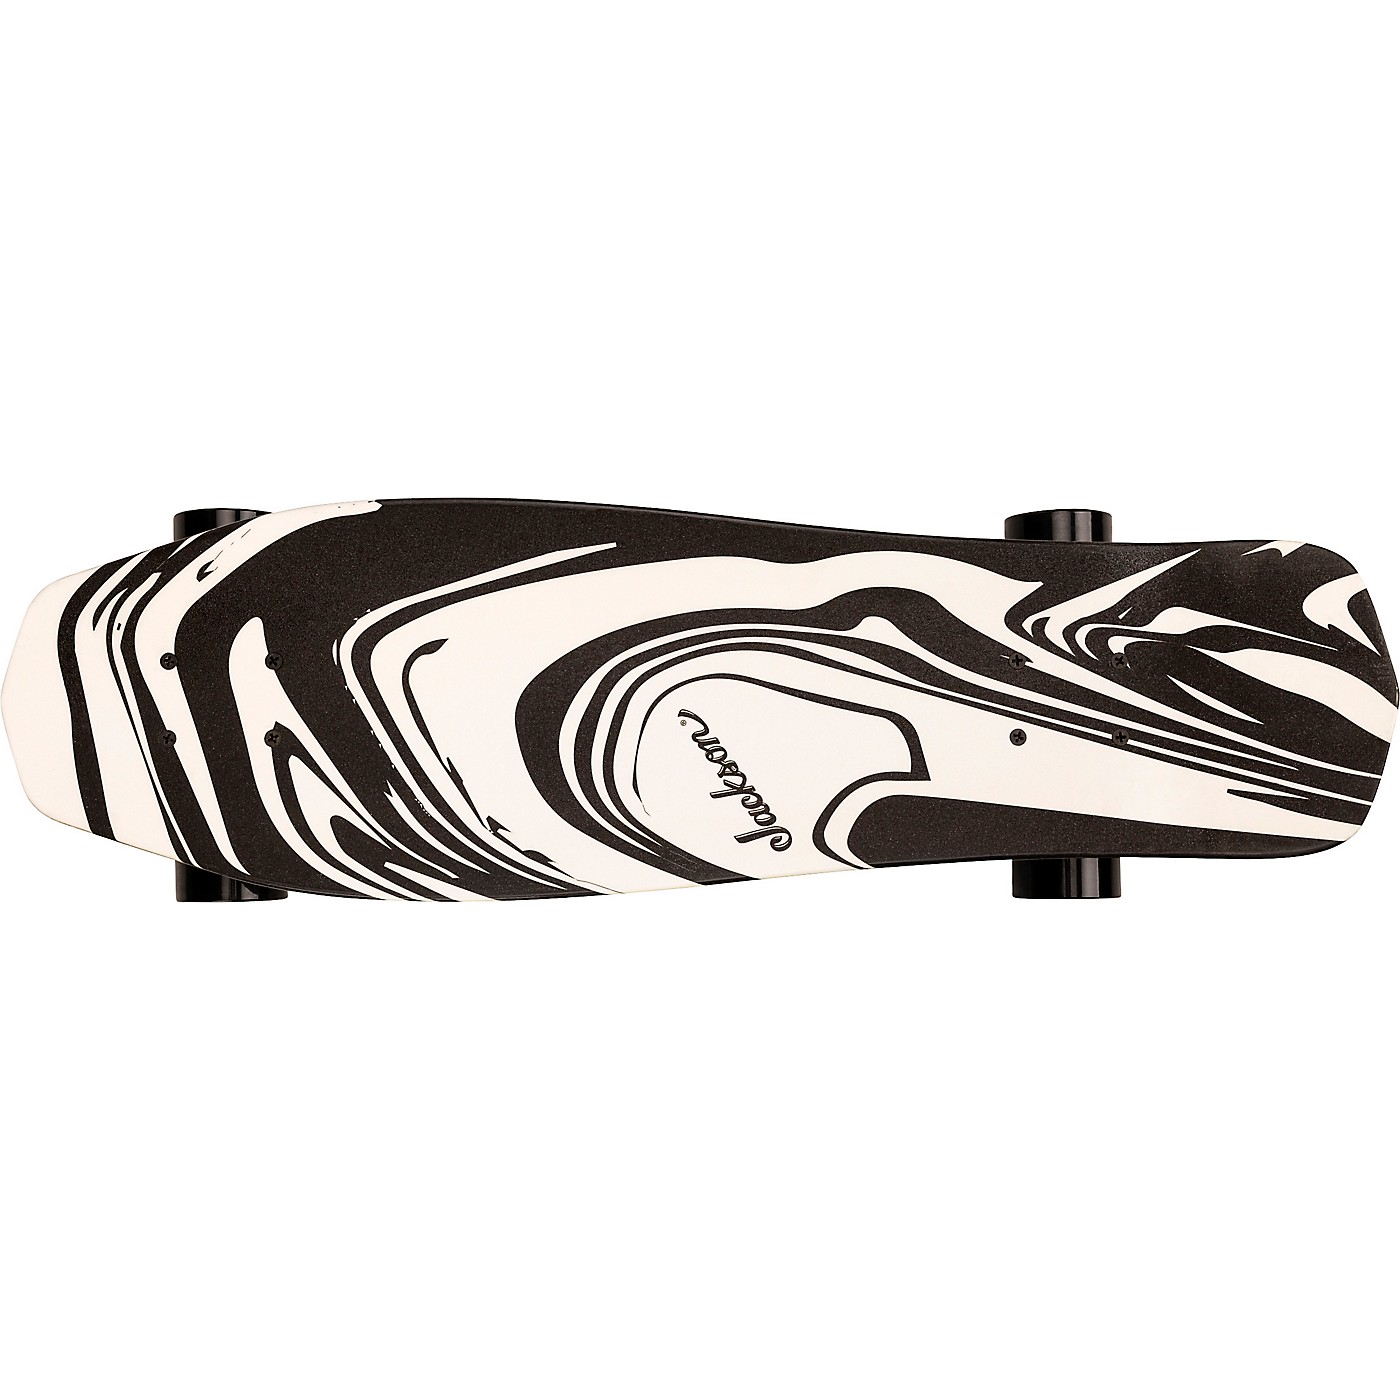 Jackson Black & White Swirl Skateboard thumbnail